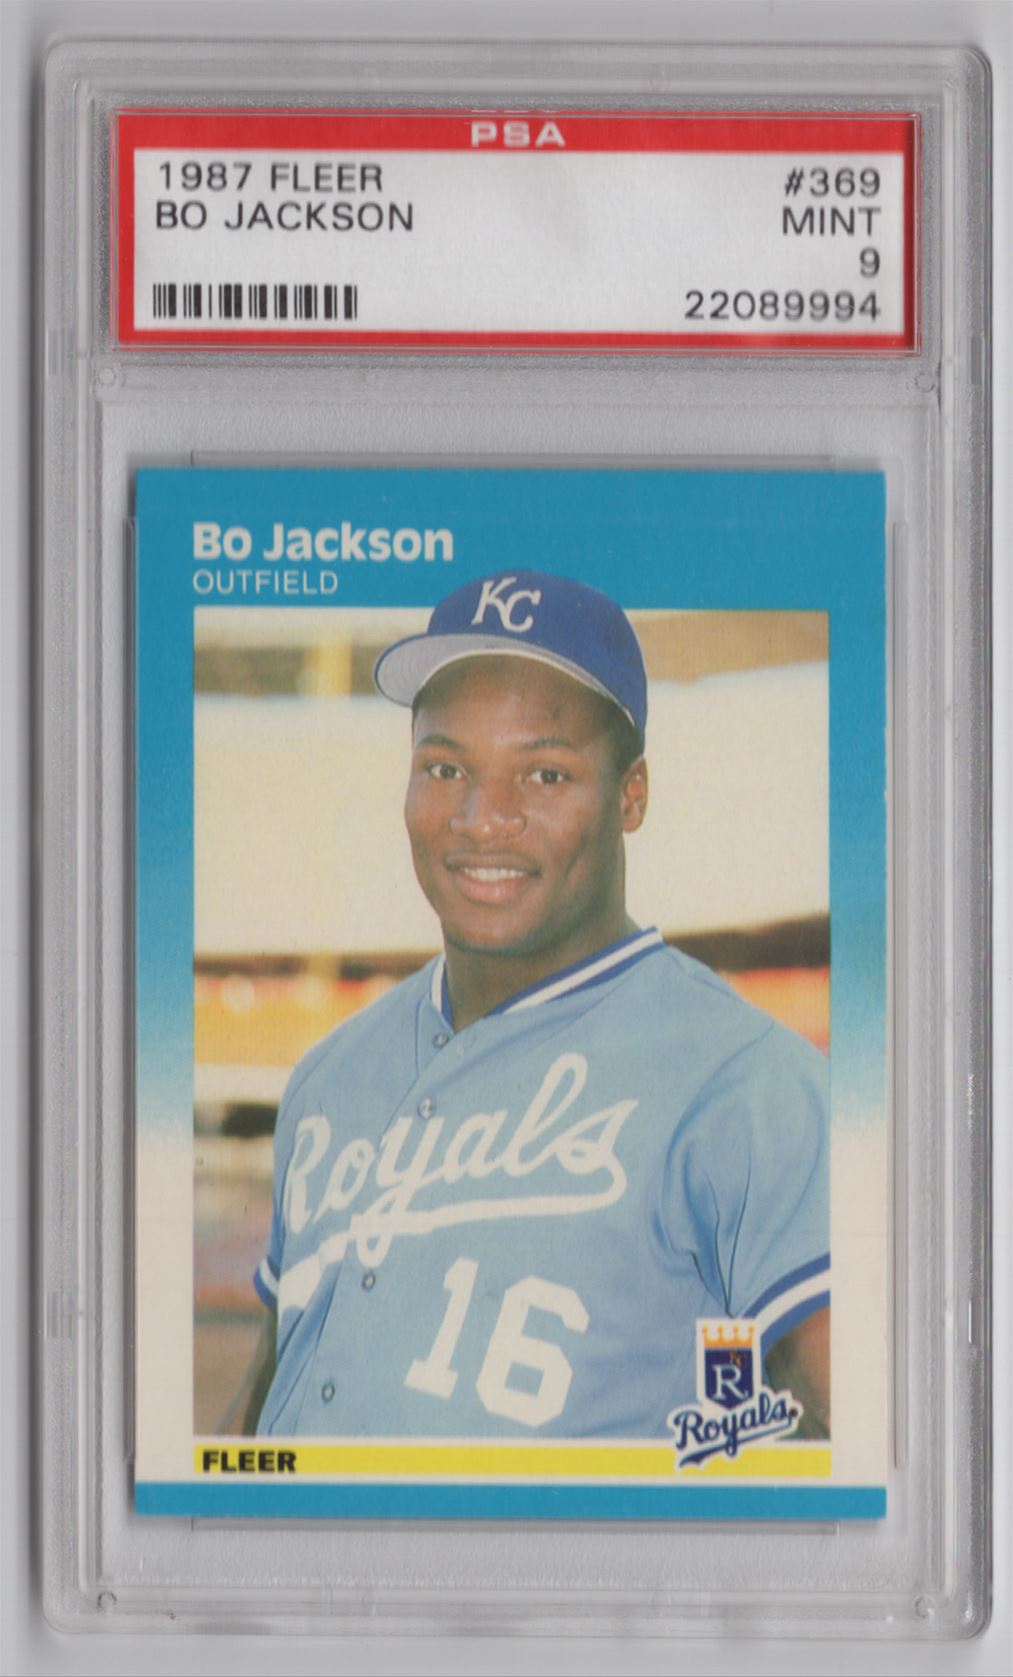 Bo Jackson 1987 Fleer Card